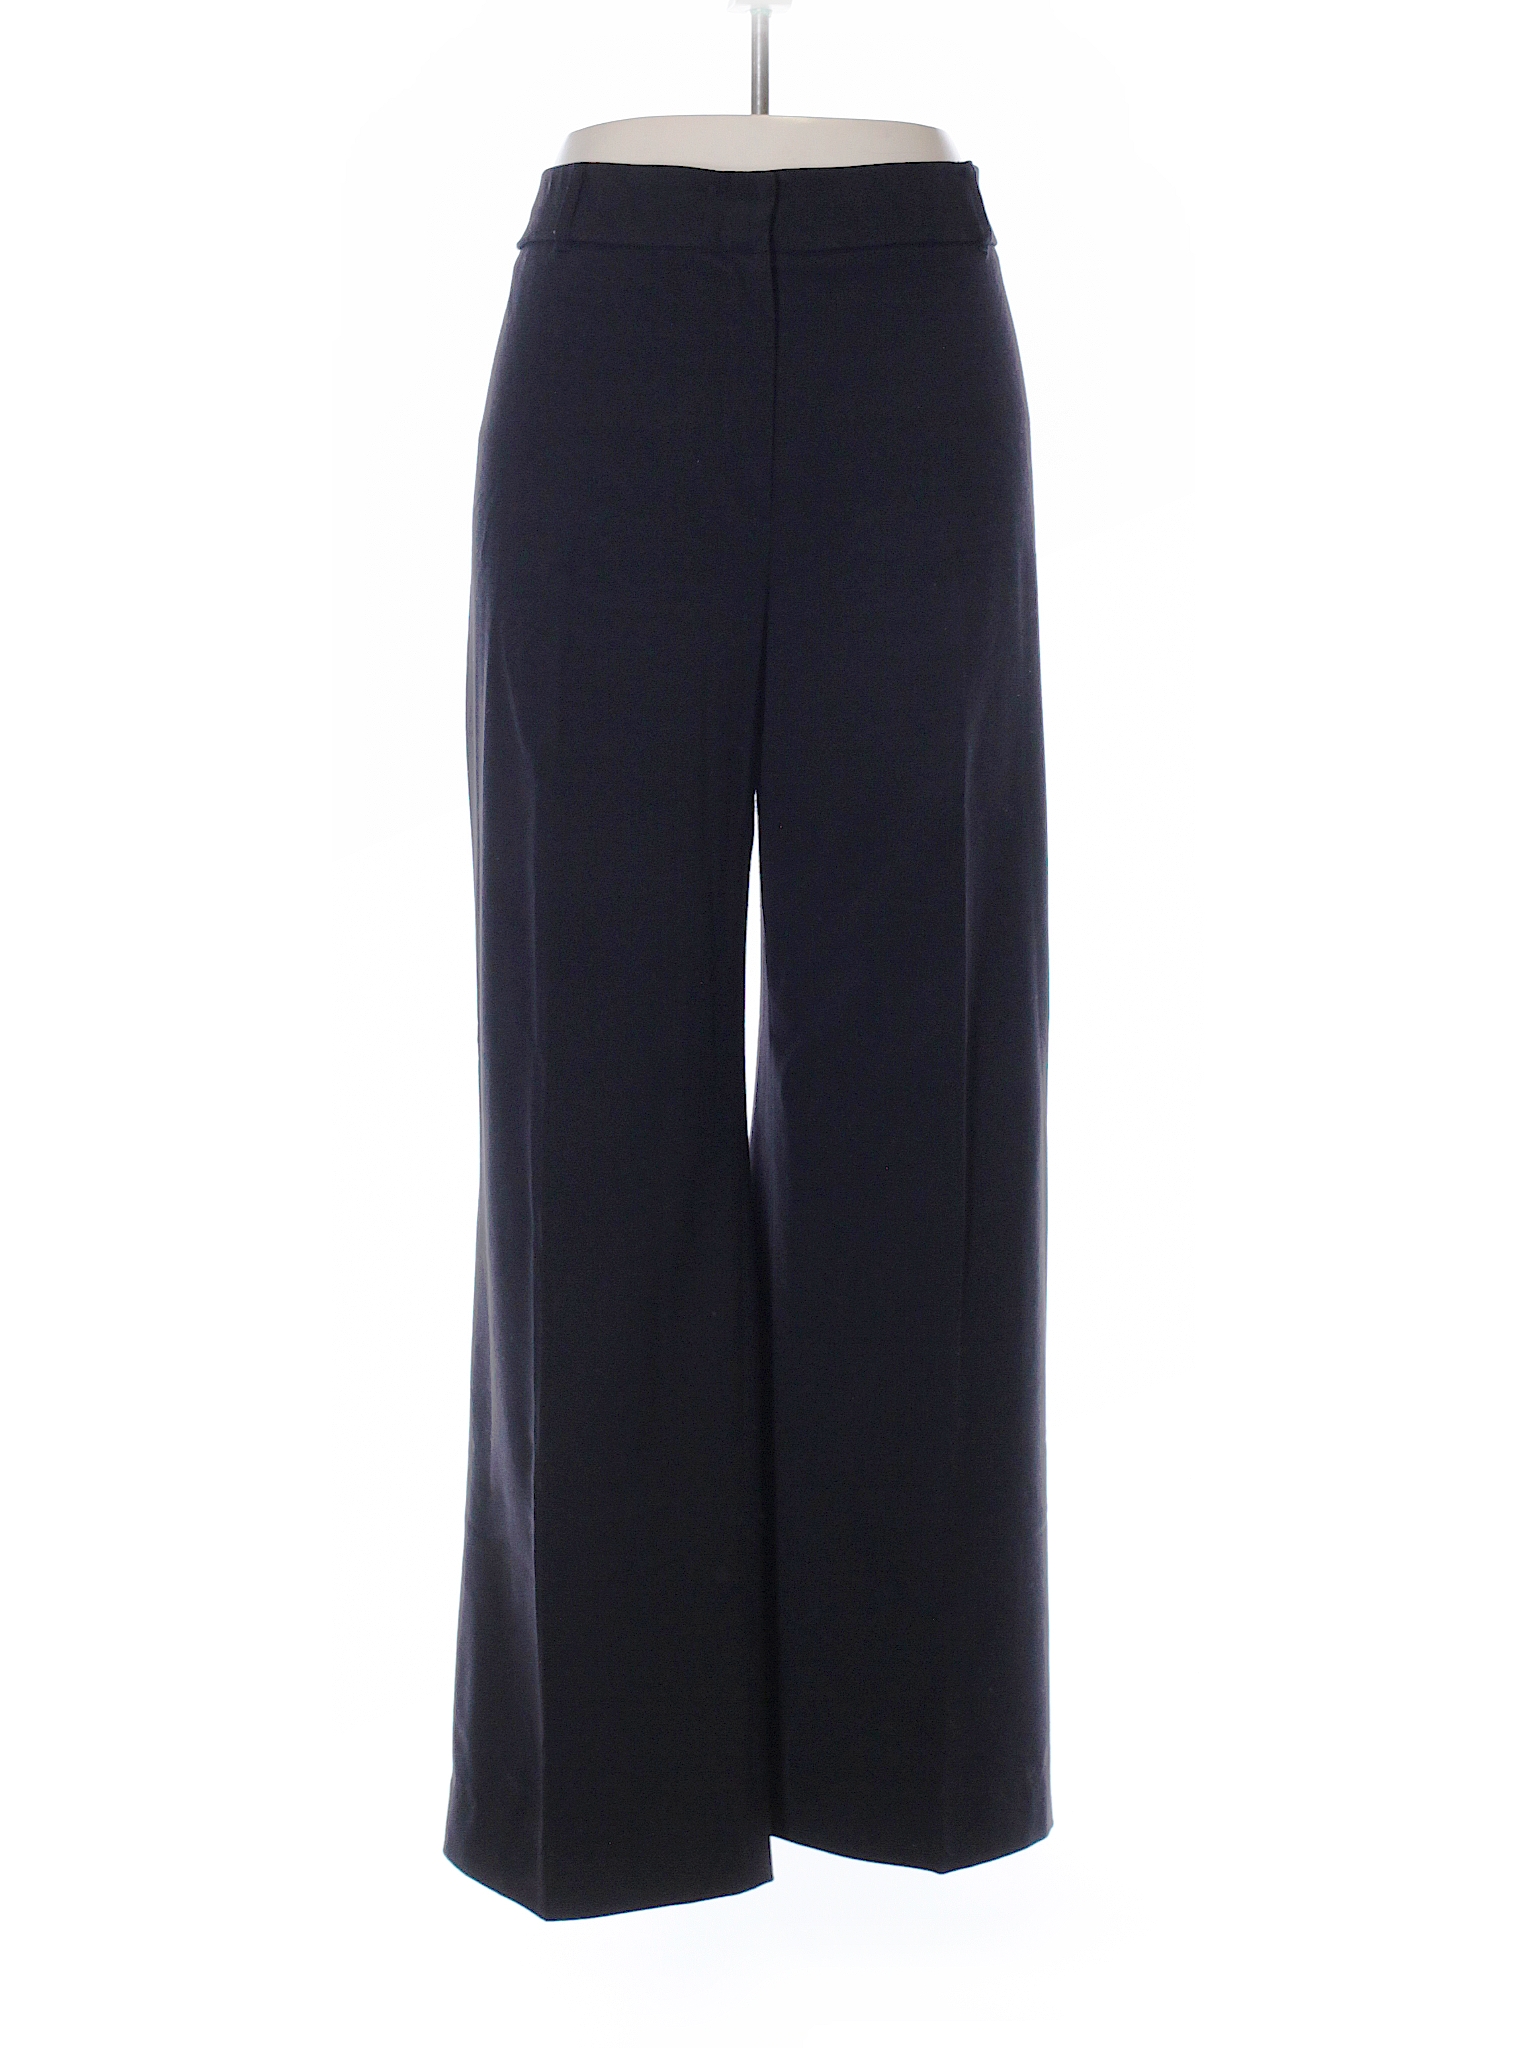 Zac & Rachel Solid Black Dress Pants Size 24 (Plus) - 73% off | thredUP